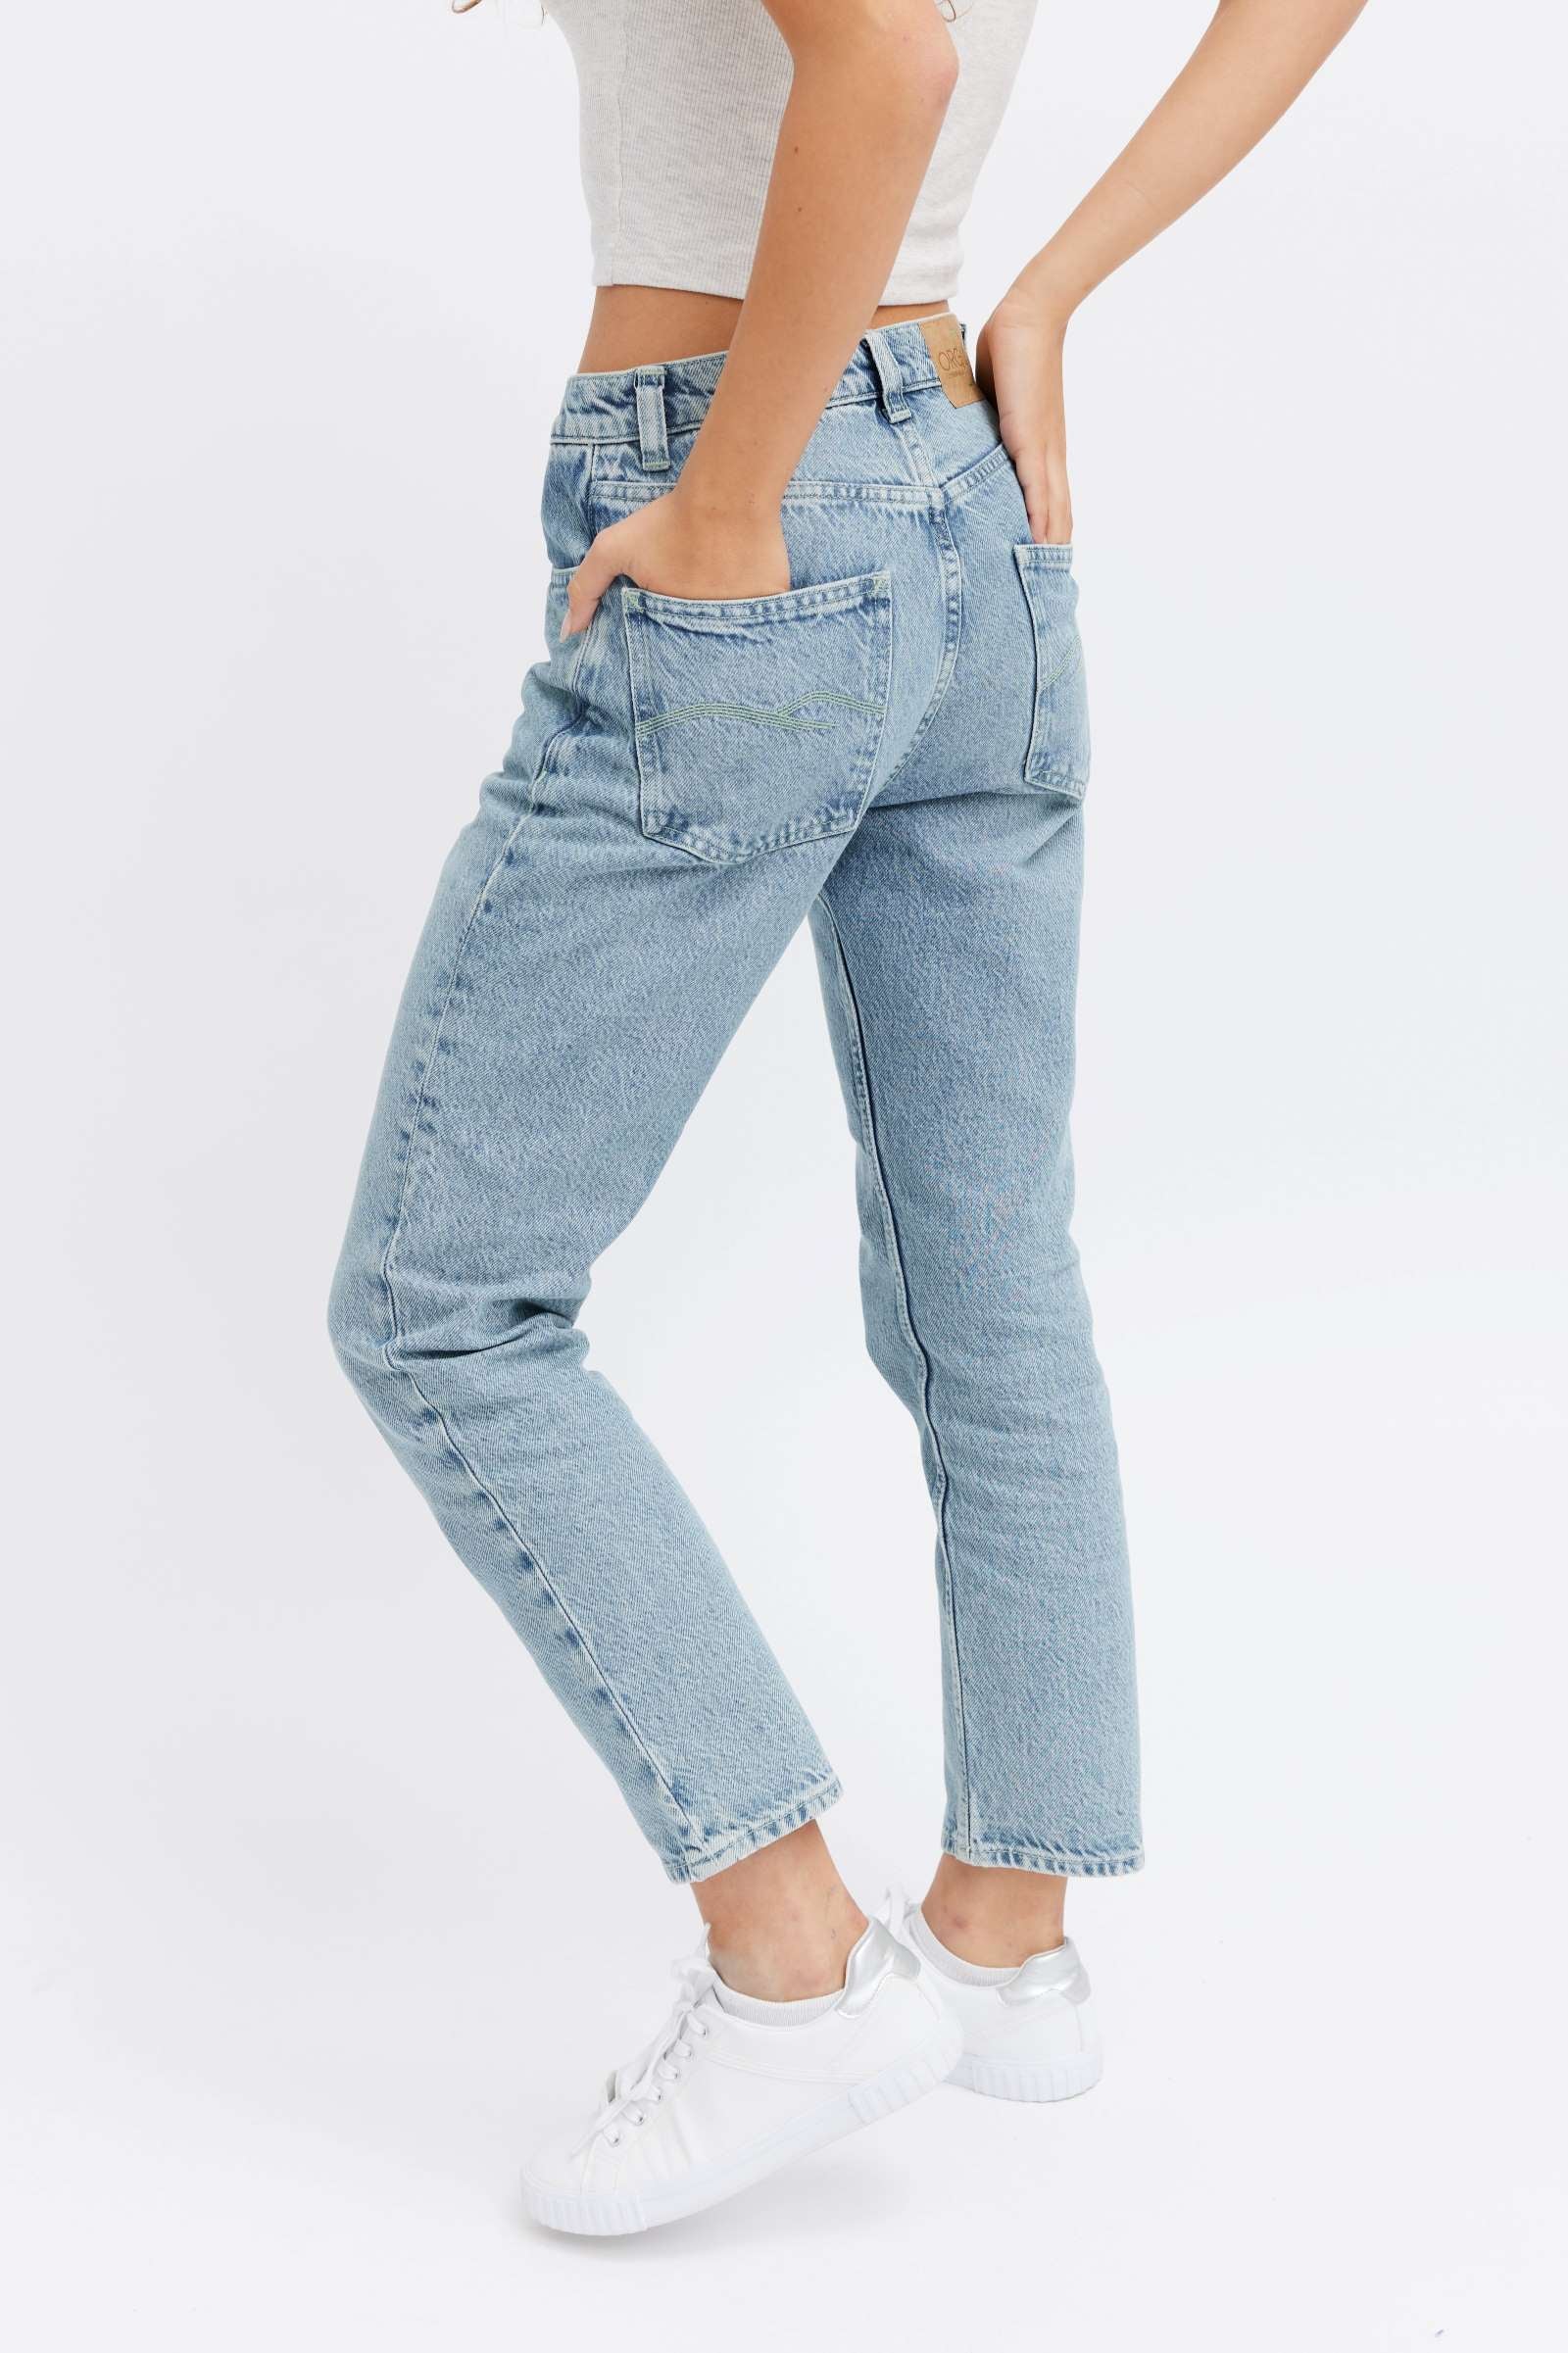  KECKS Women's Jeans Jeans for Women Pants for Women Ripped Raw  Hem Skinny Jeans (Color : Dark Wash, Size : Medium) : ביגוד, נעליים ותכשיטים